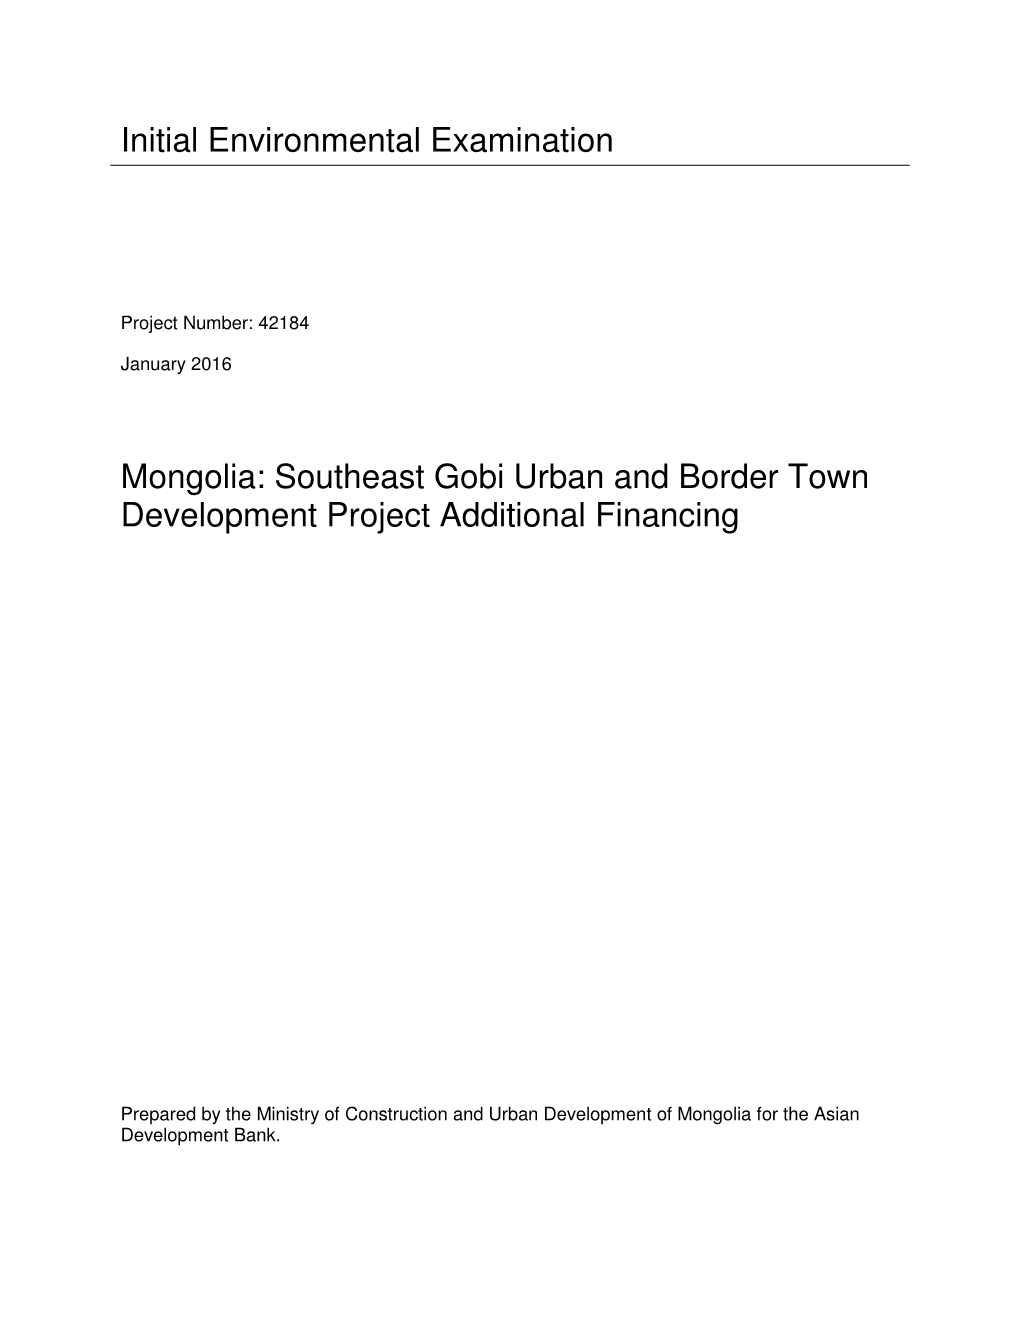 Initial Environmental Examination Mongolia: Southeast Gobi Urban and Border Town Development Project Additional Financing